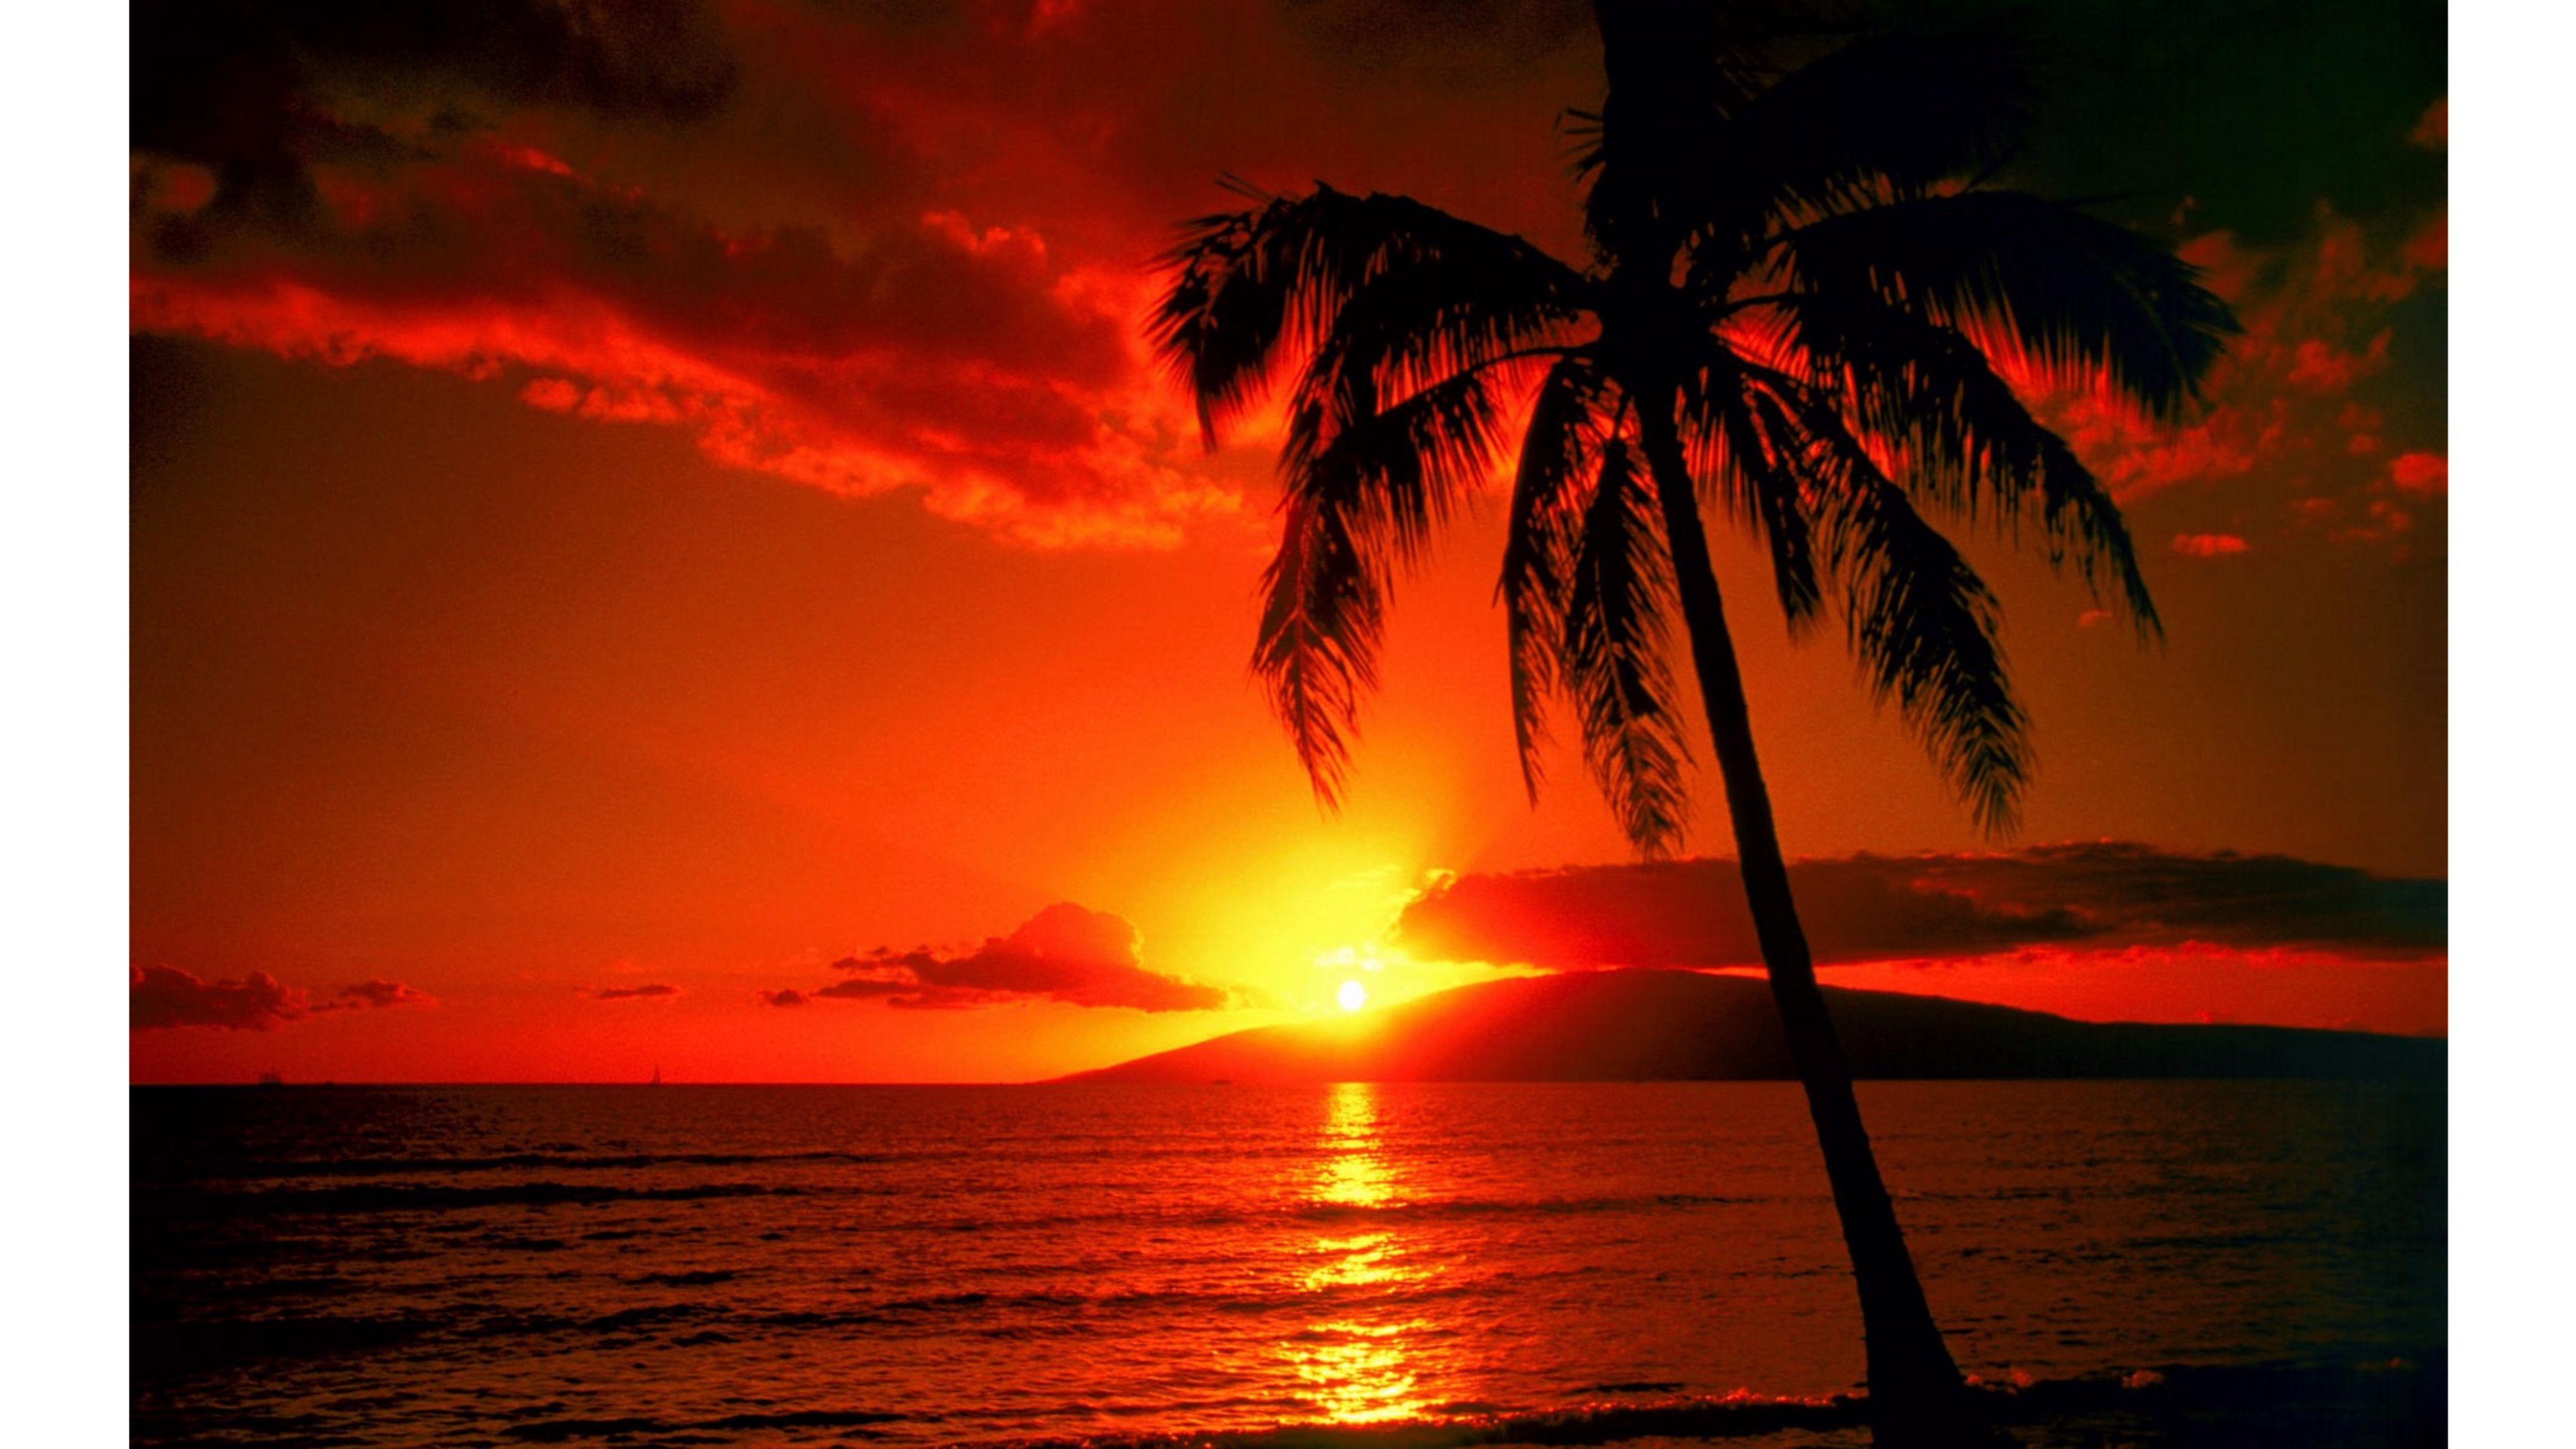 Tropical Sunset 4k UHD Free Desktop Wallpaper